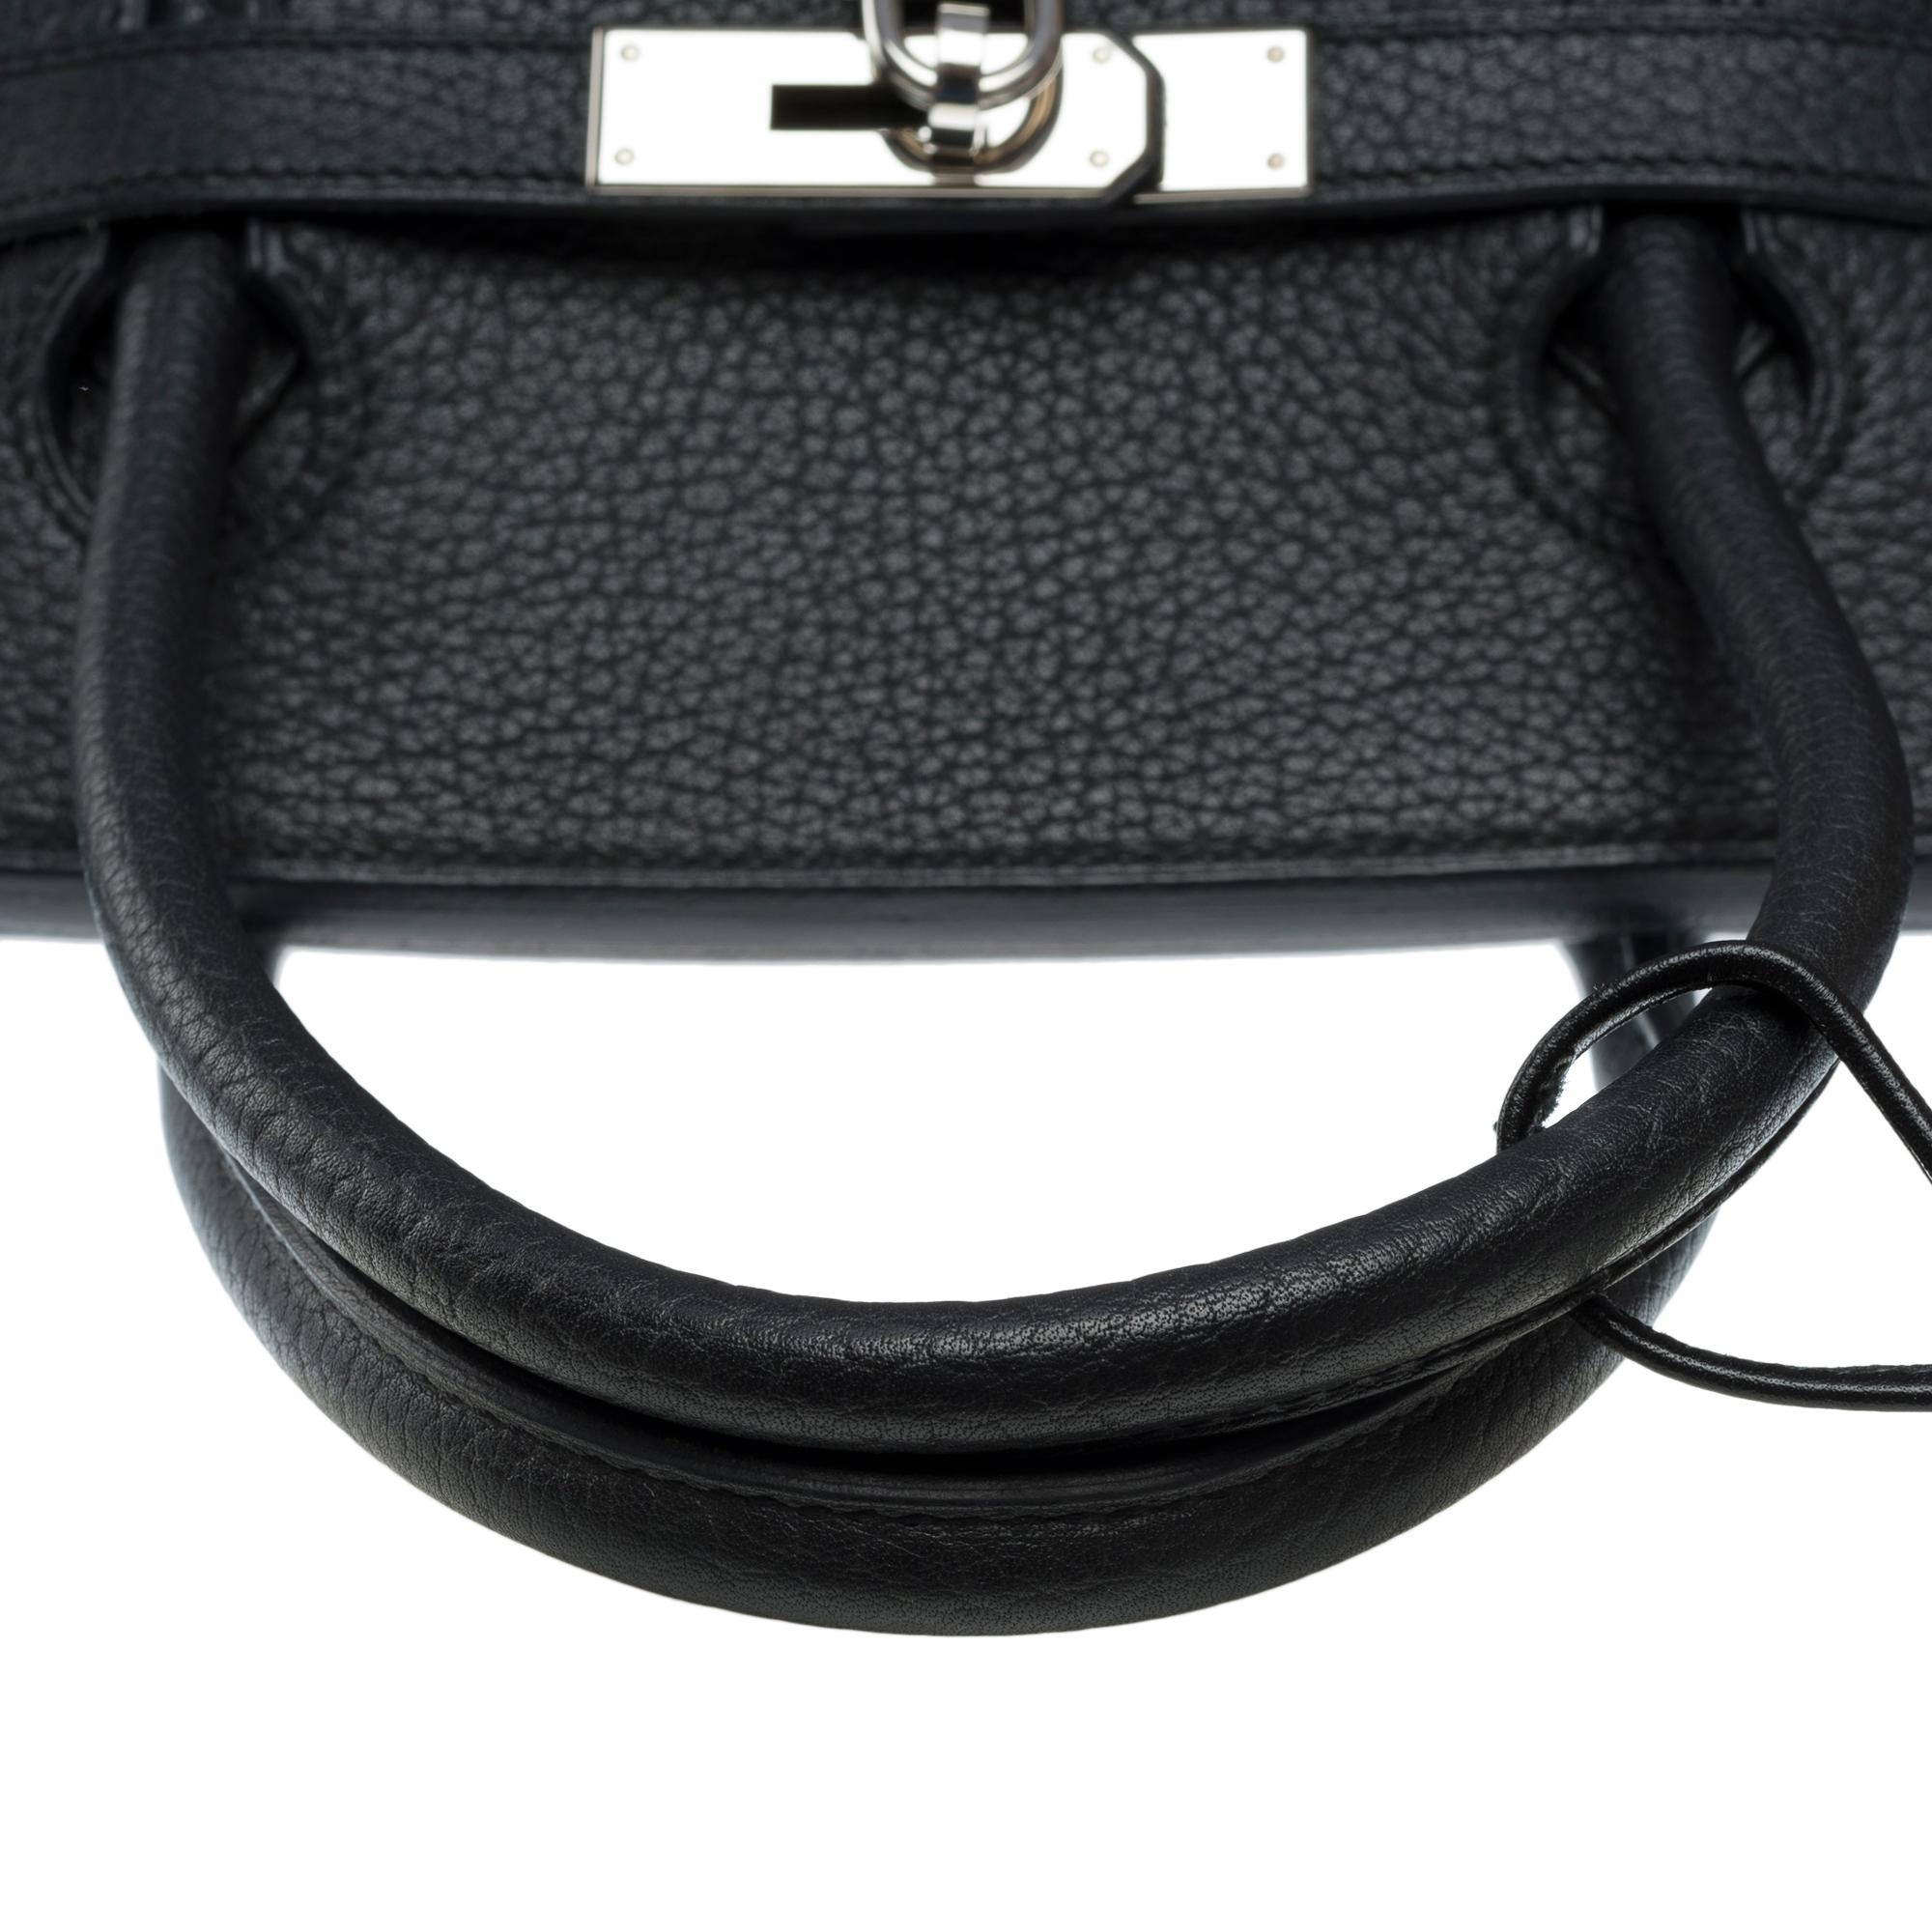 Classy Hermes Birkin 40cm handbag in Black Fjord calf leather, SHW For Sale 5